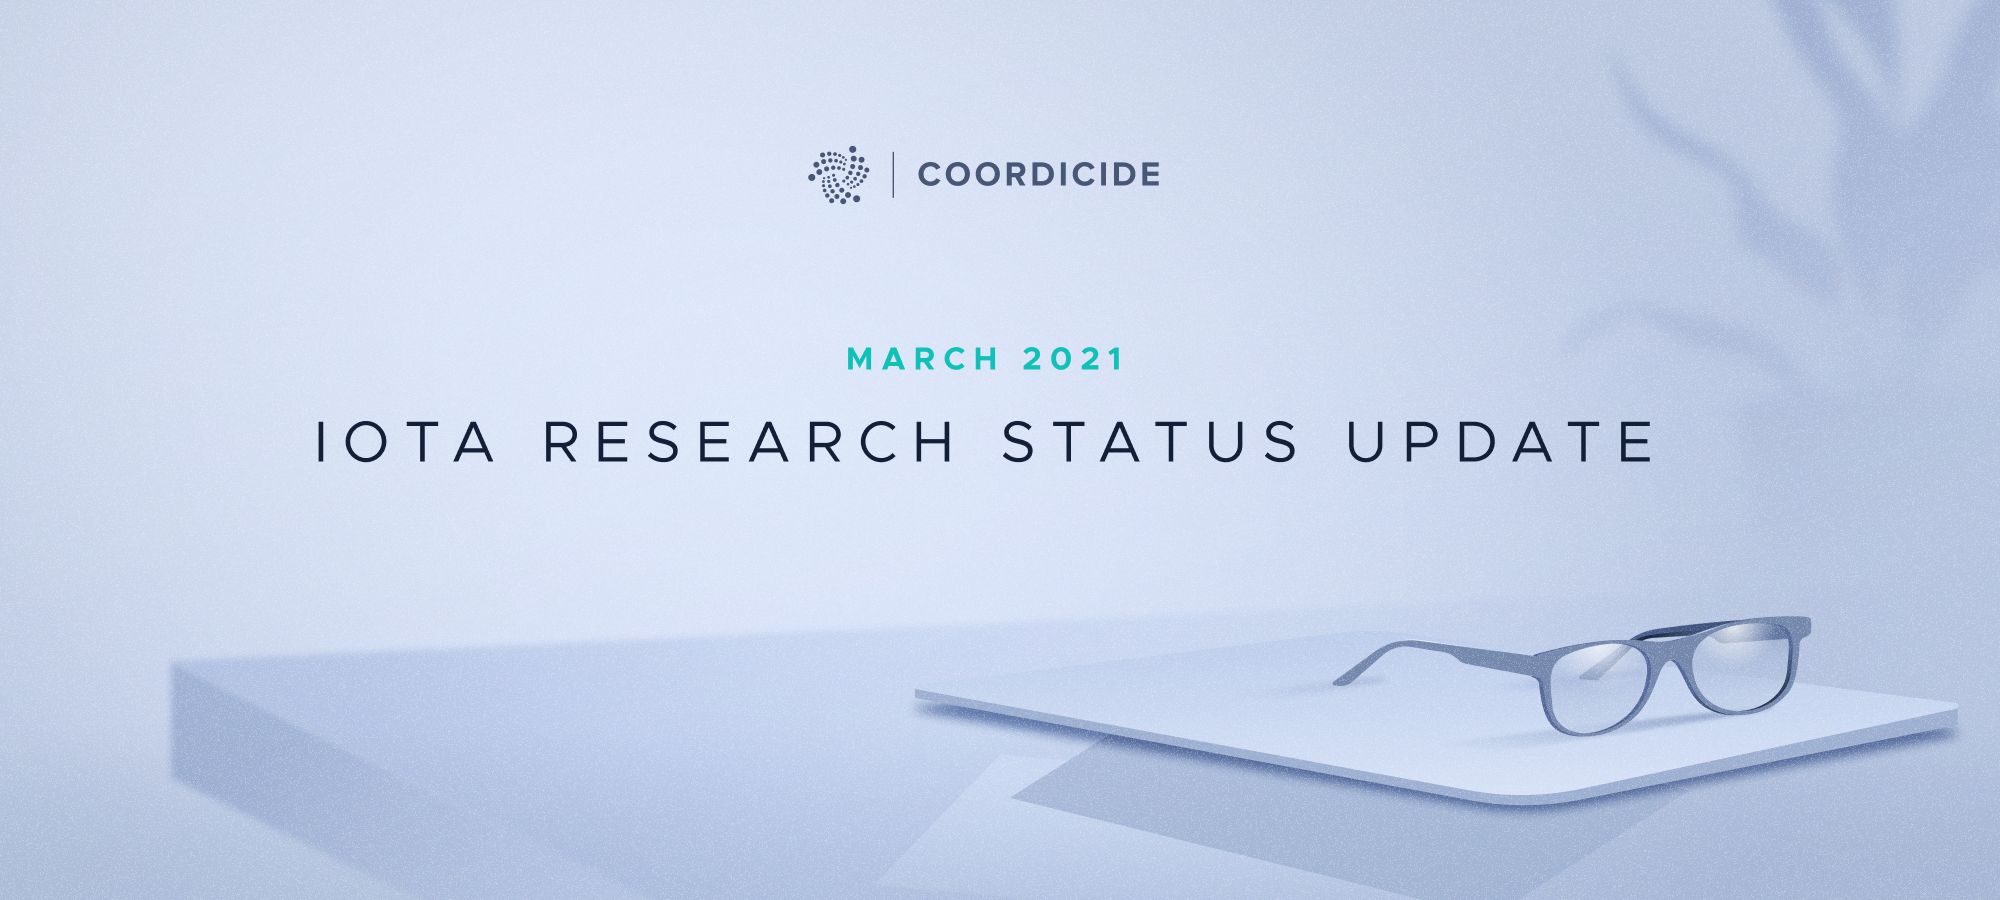 IOTA Research Status Update
March 2021